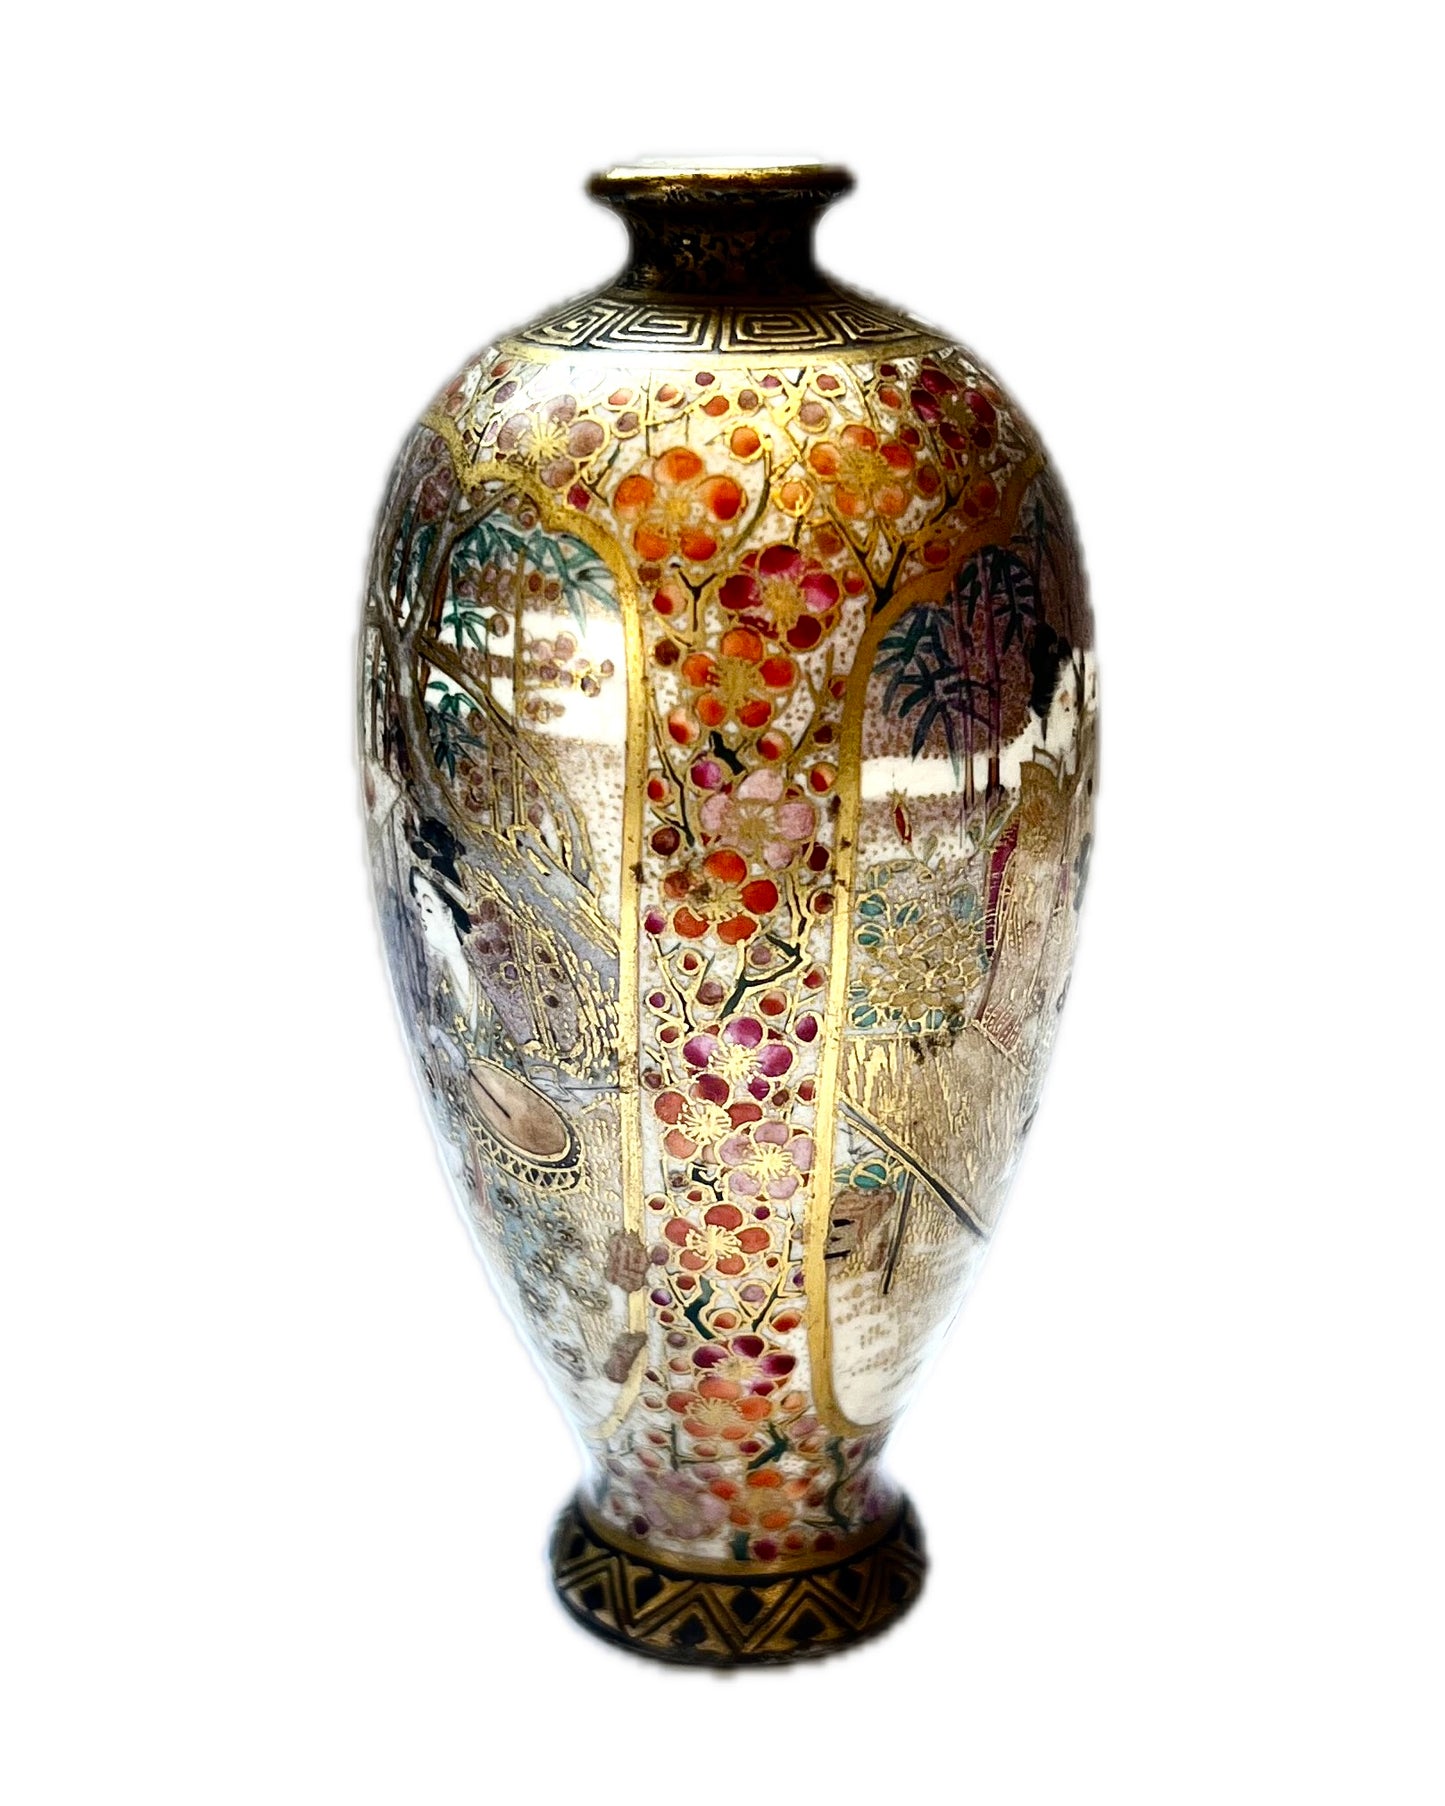 Antique Satsuma porcelain vase circa Meiji period, mid to late 19th century